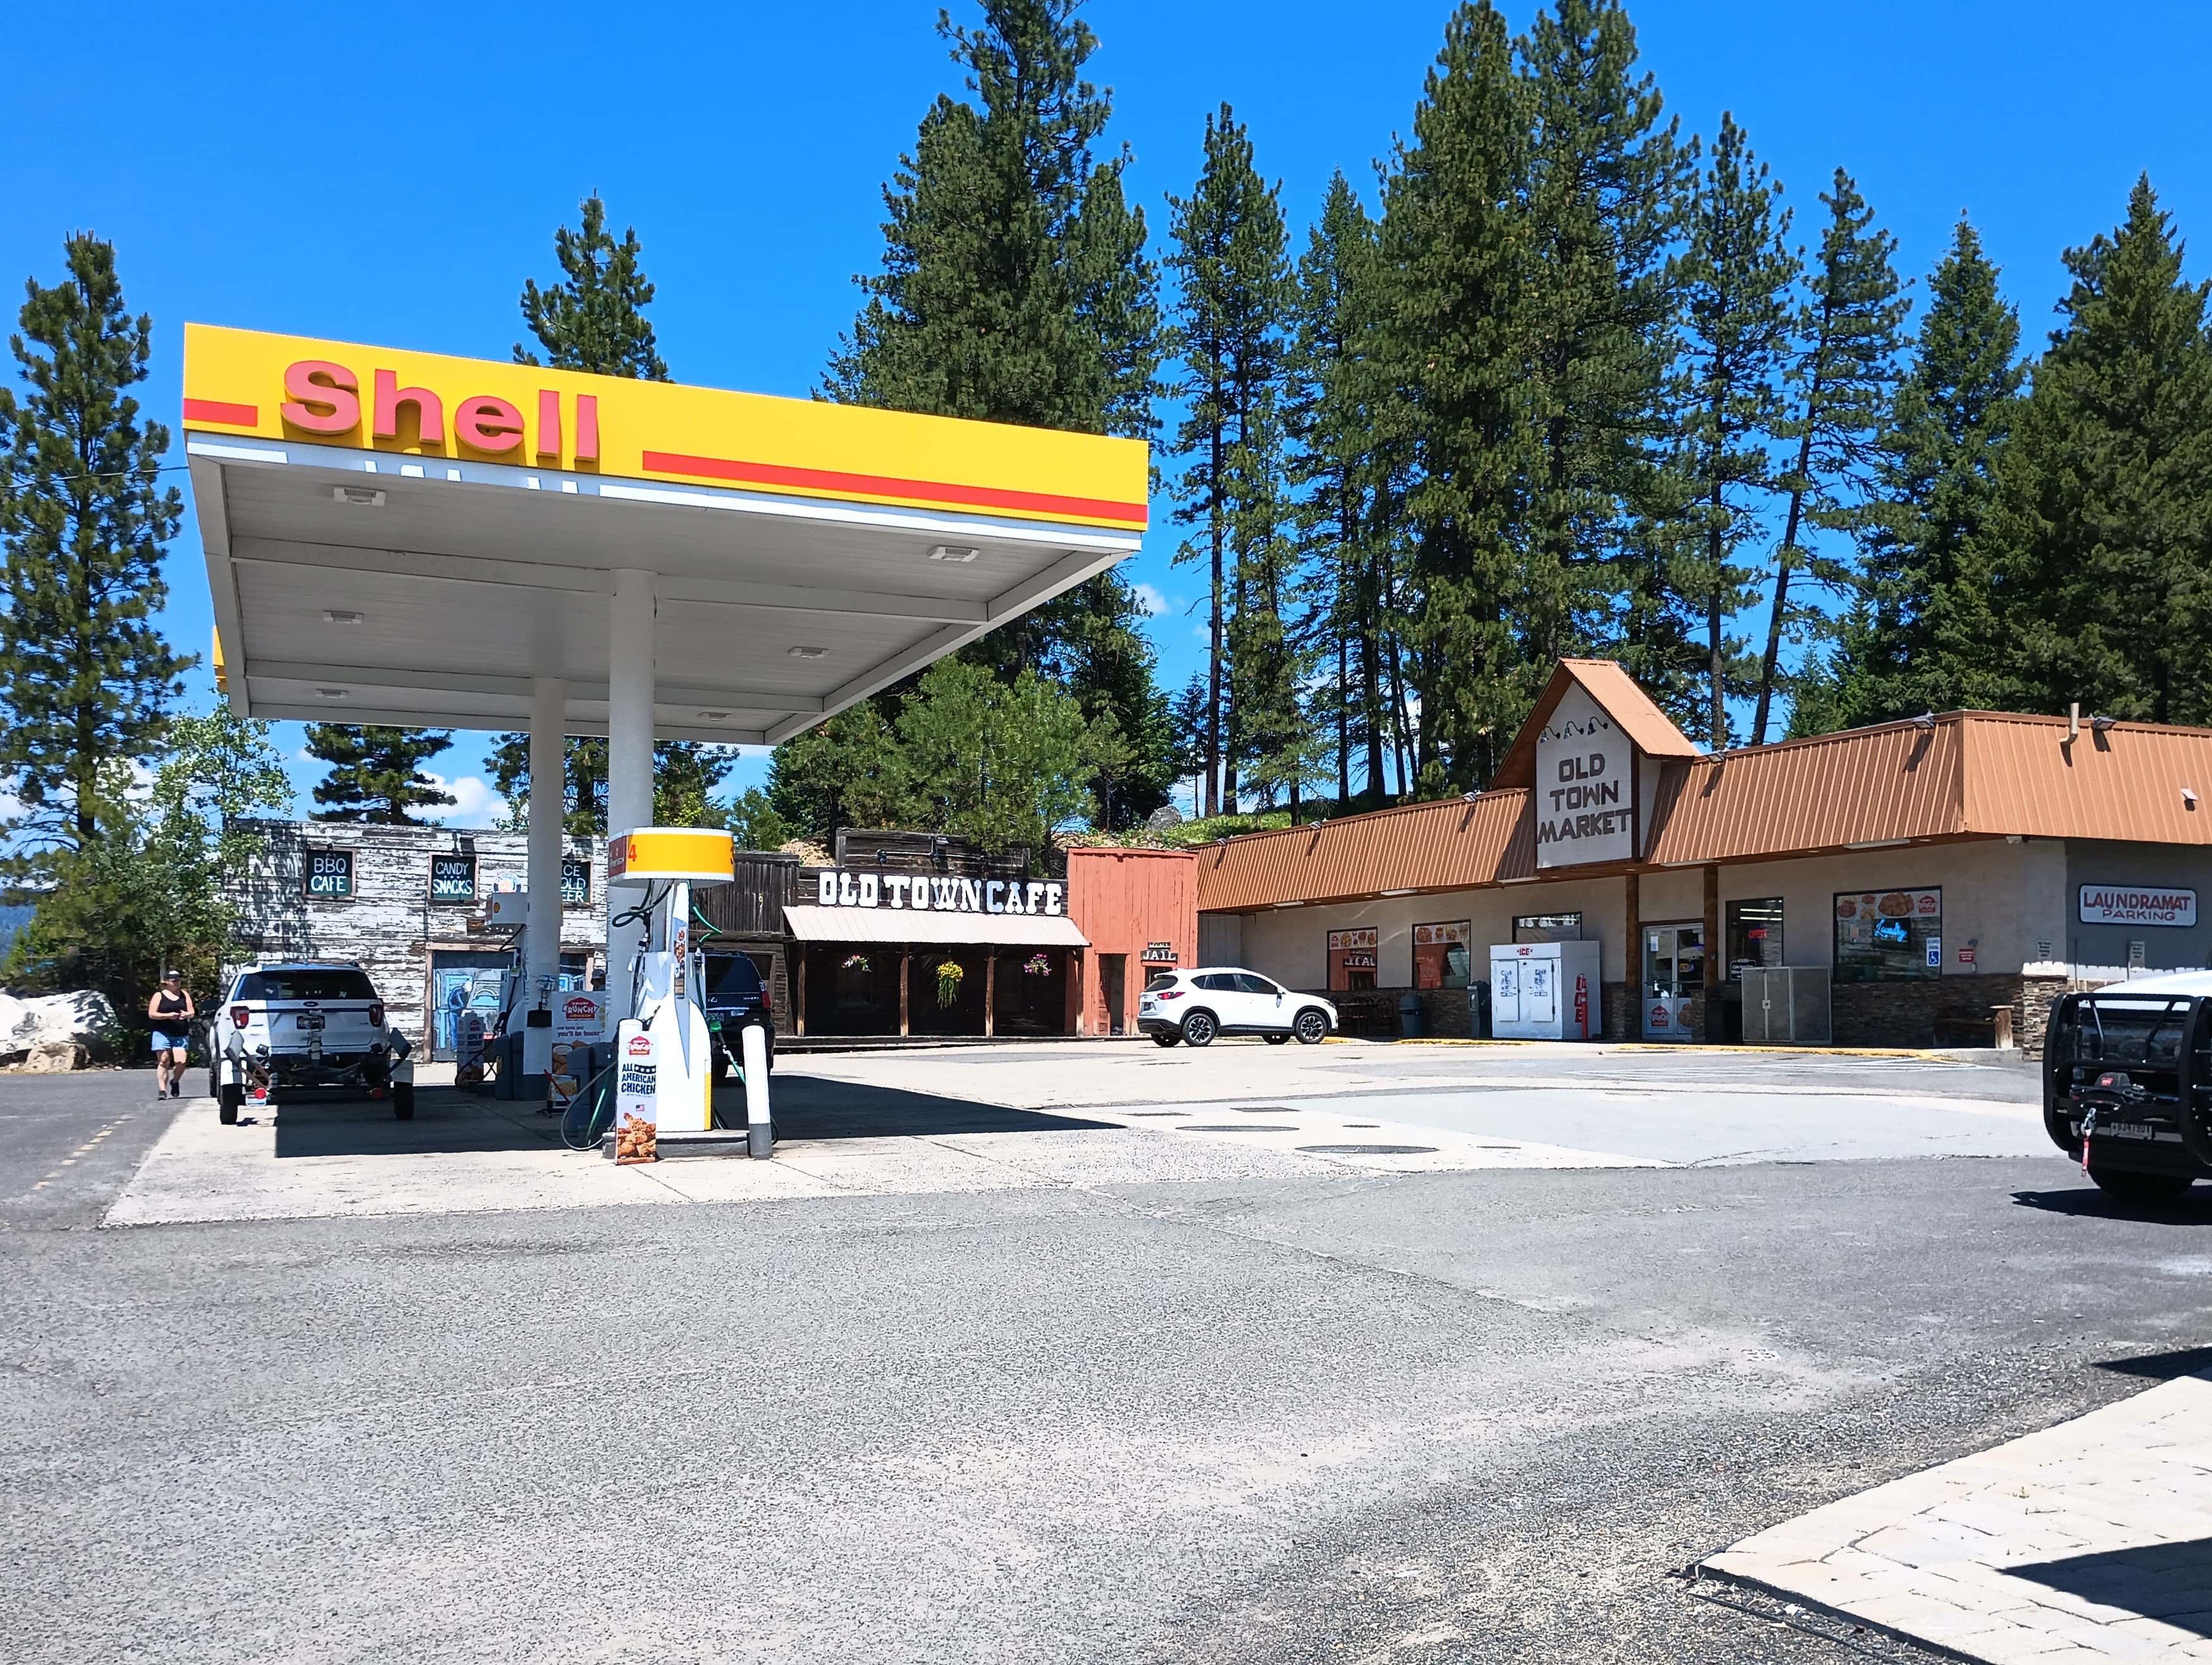 Shell - McCall (ID 83638), US, gas station near my location